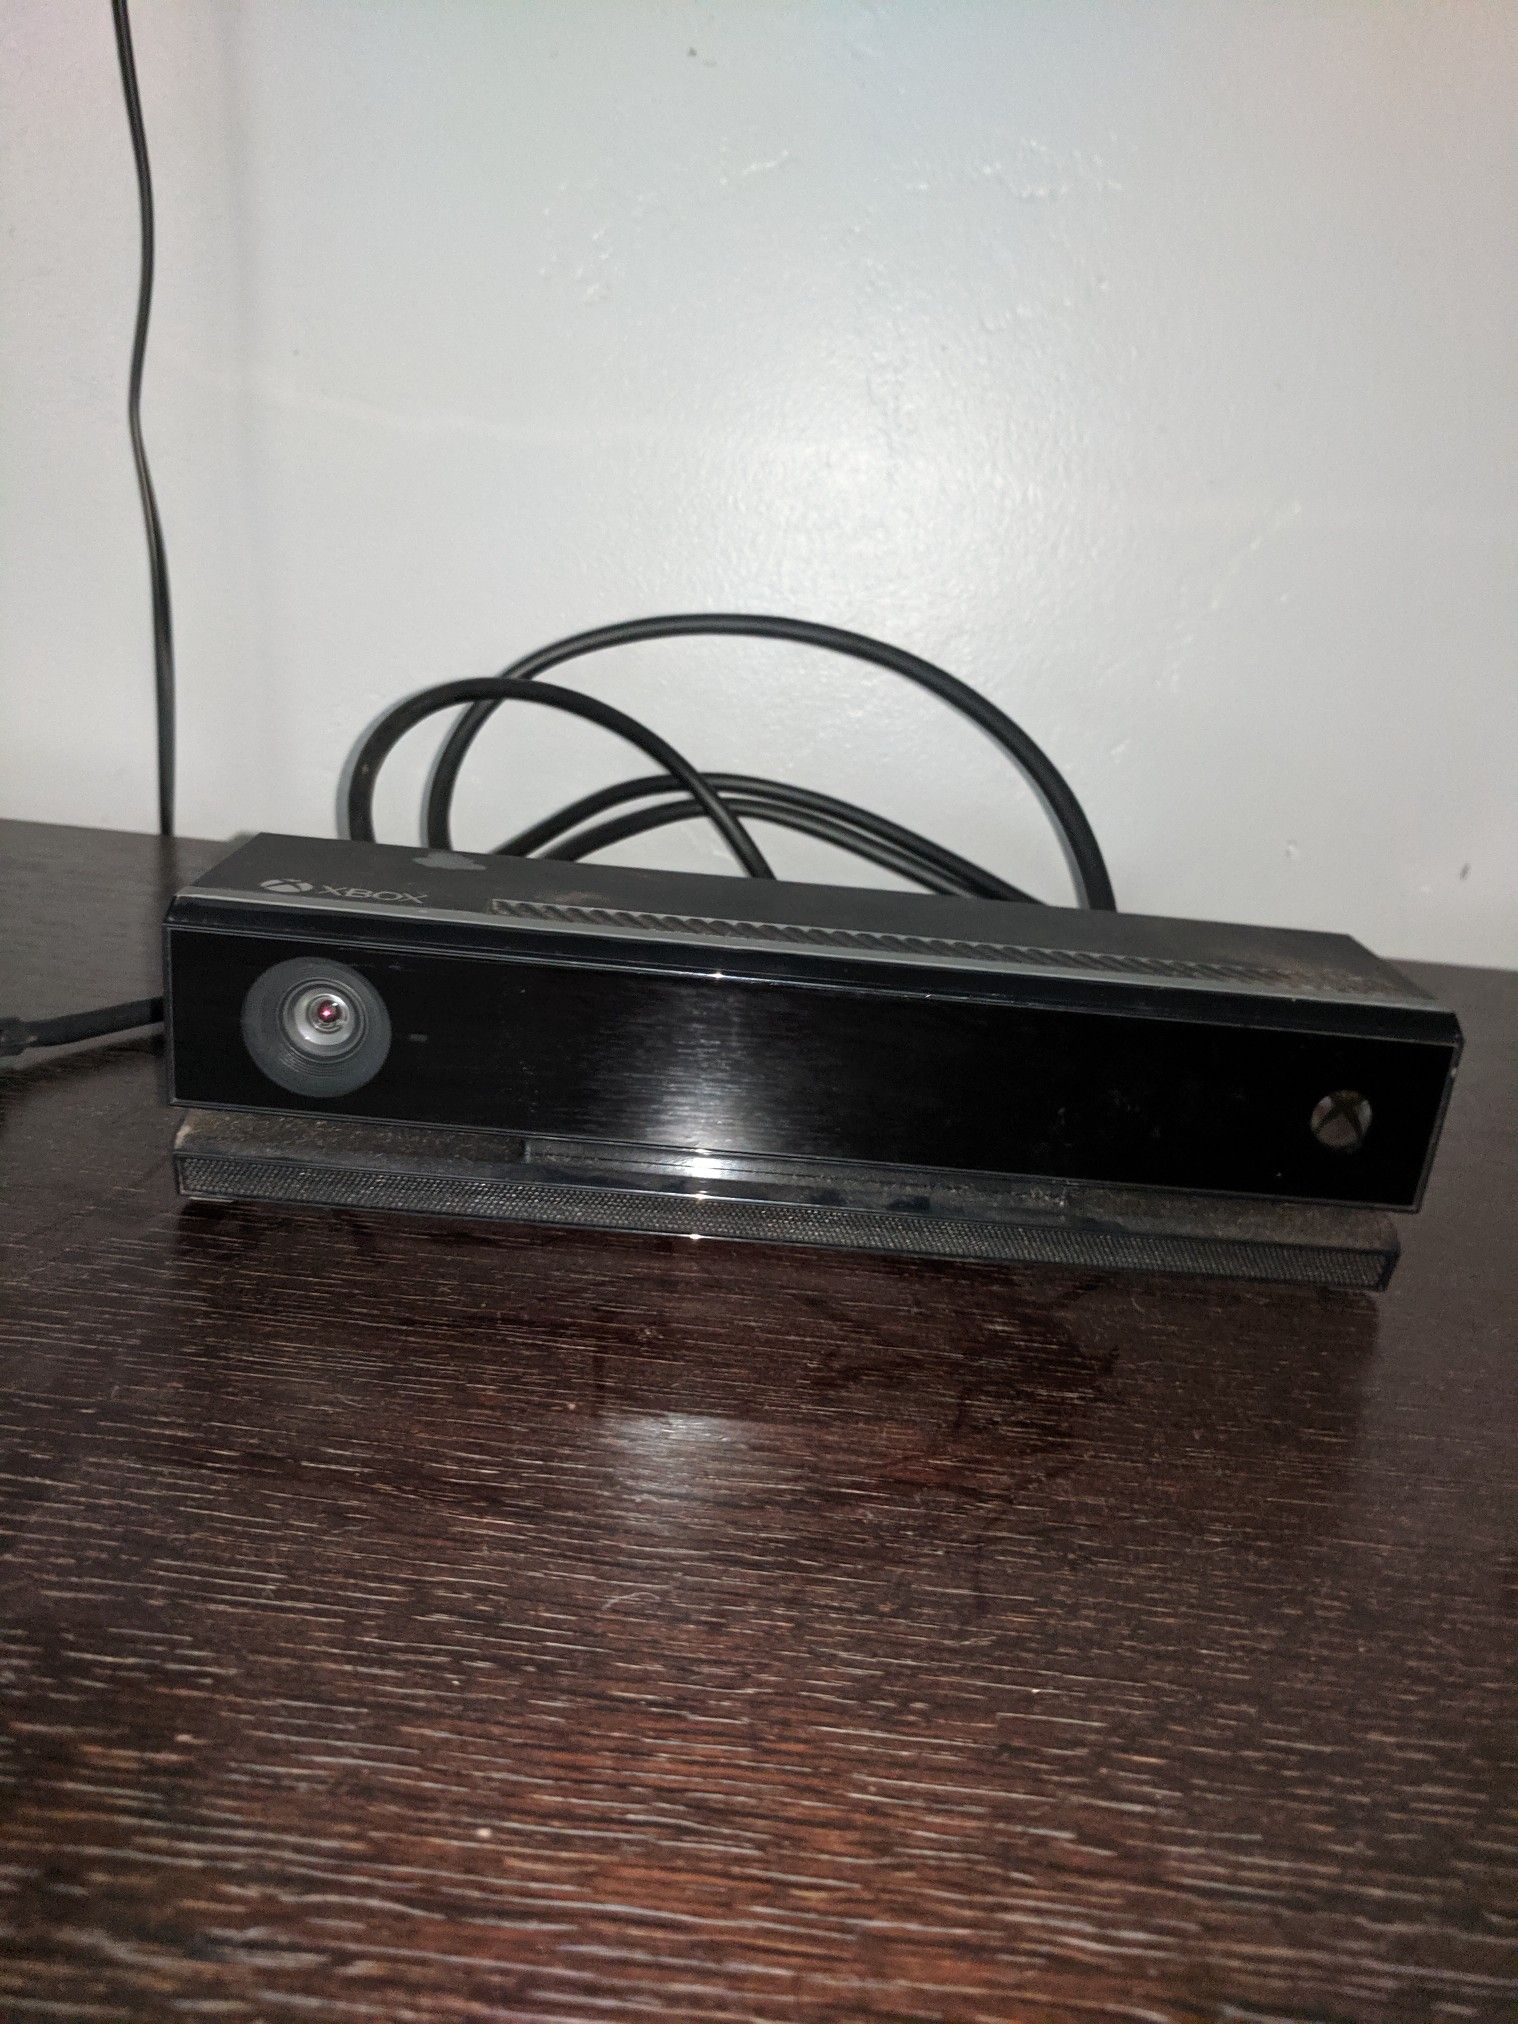 XboxOne Kinect Sensor